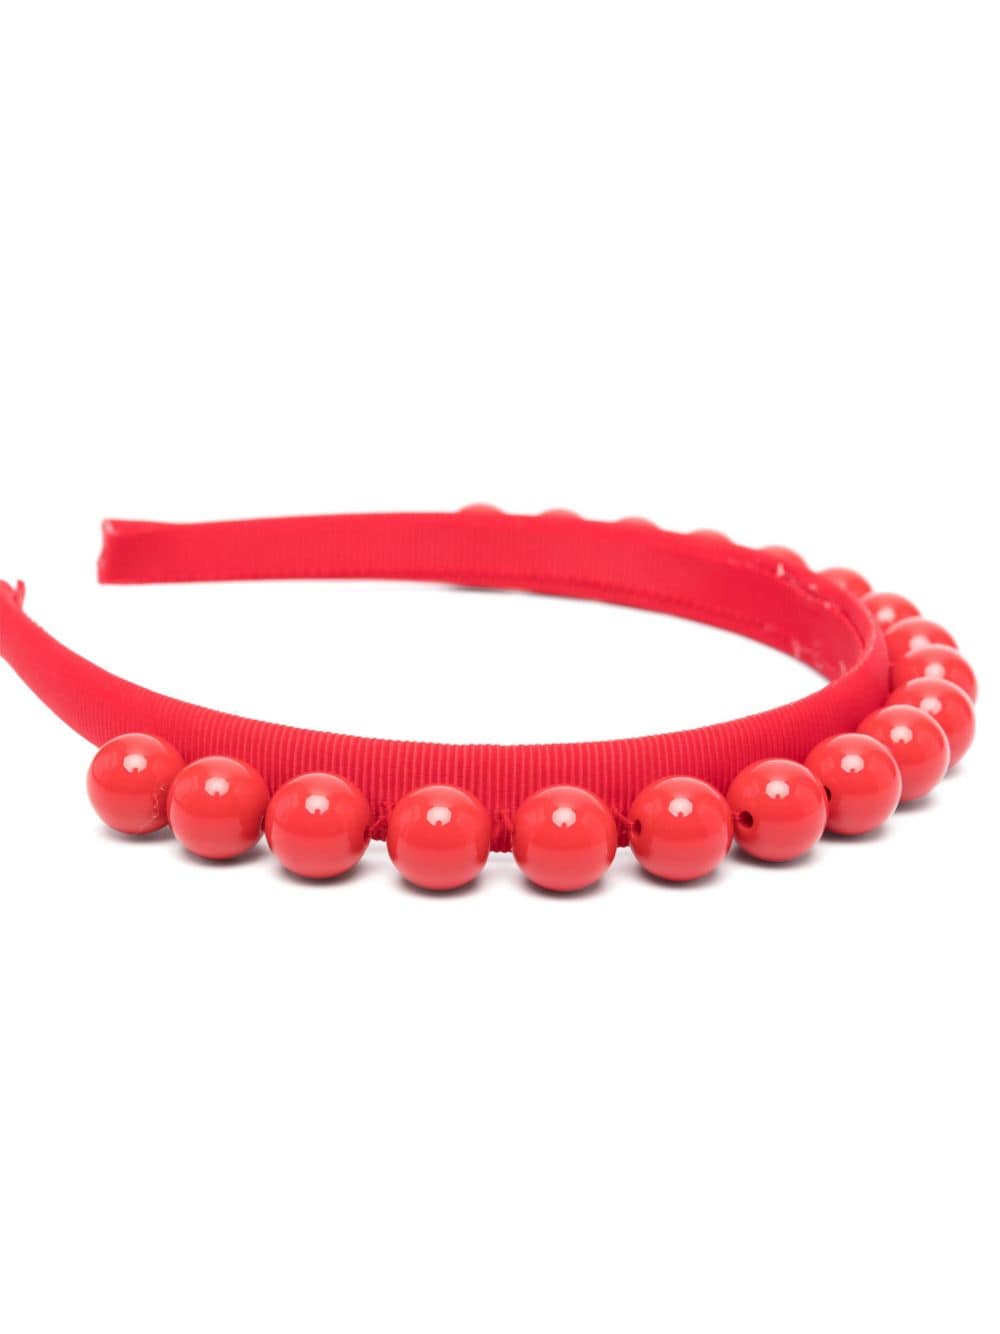 Red headband with beads